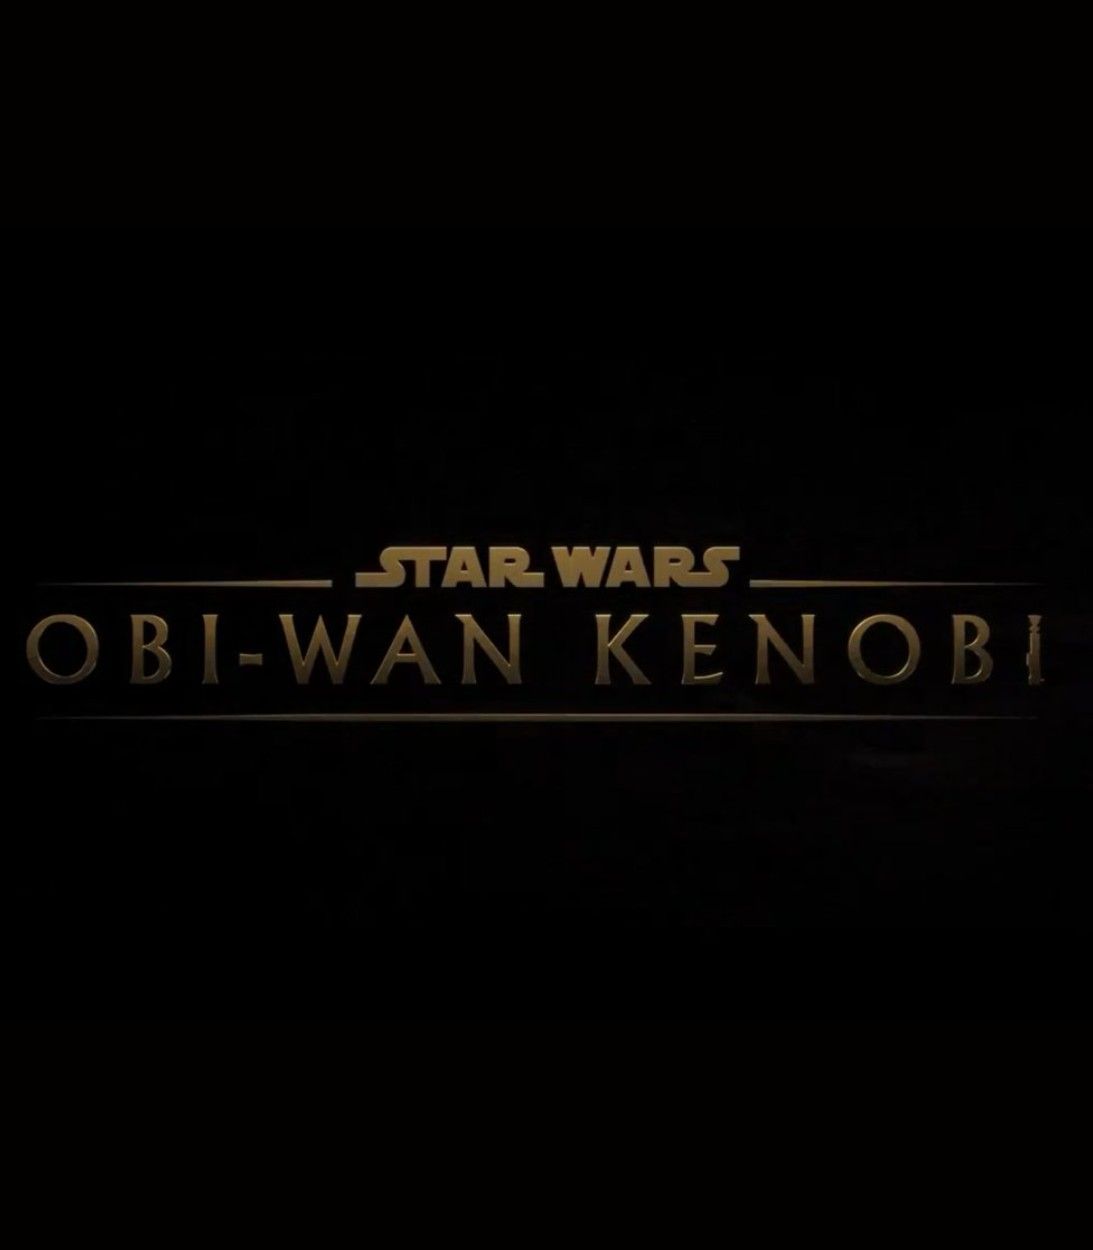 Obi-Wan Kenobi show logo vertical